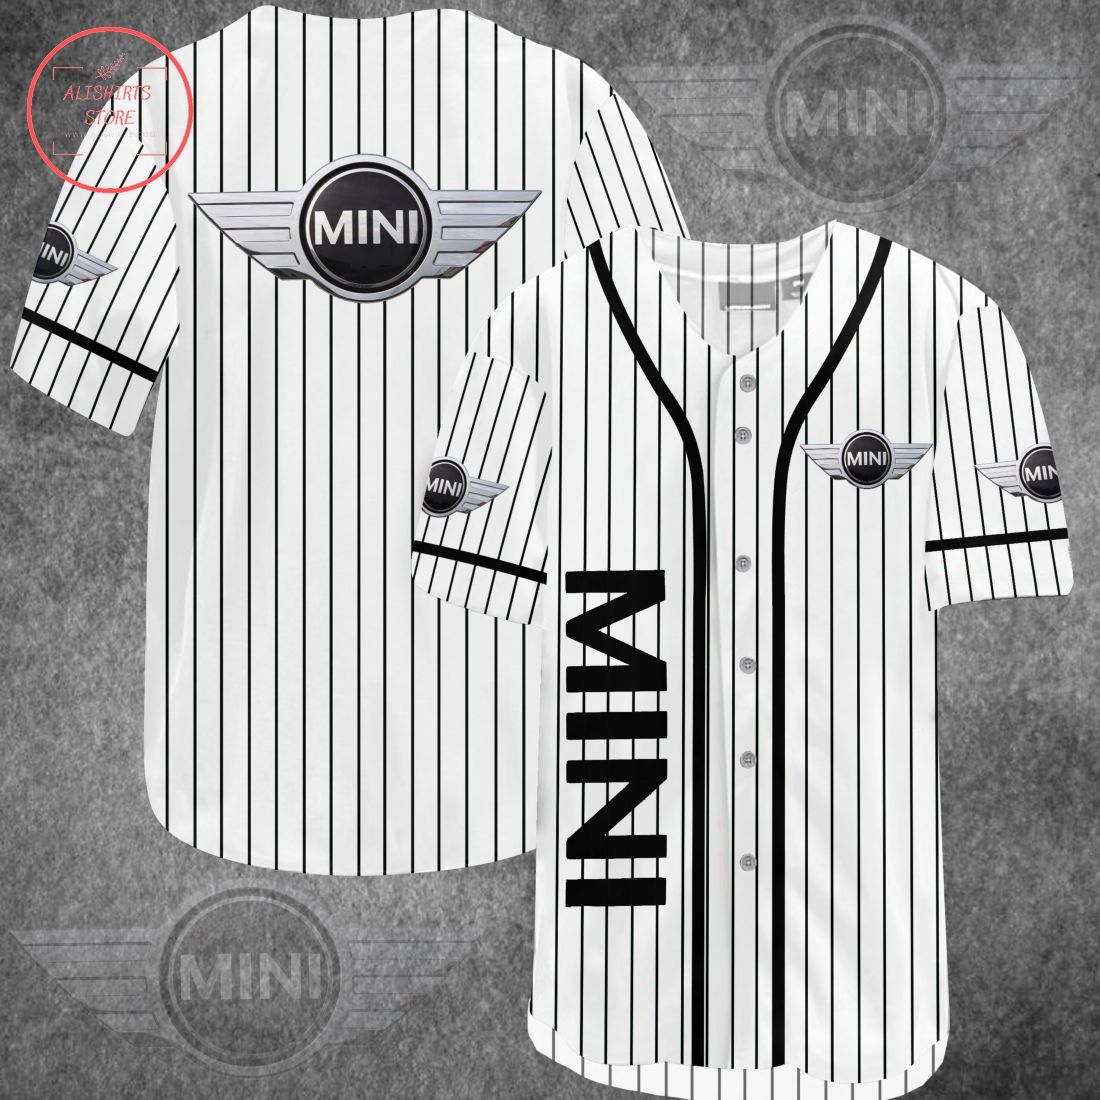 Mini Cooper Black and White Baseball Jersey